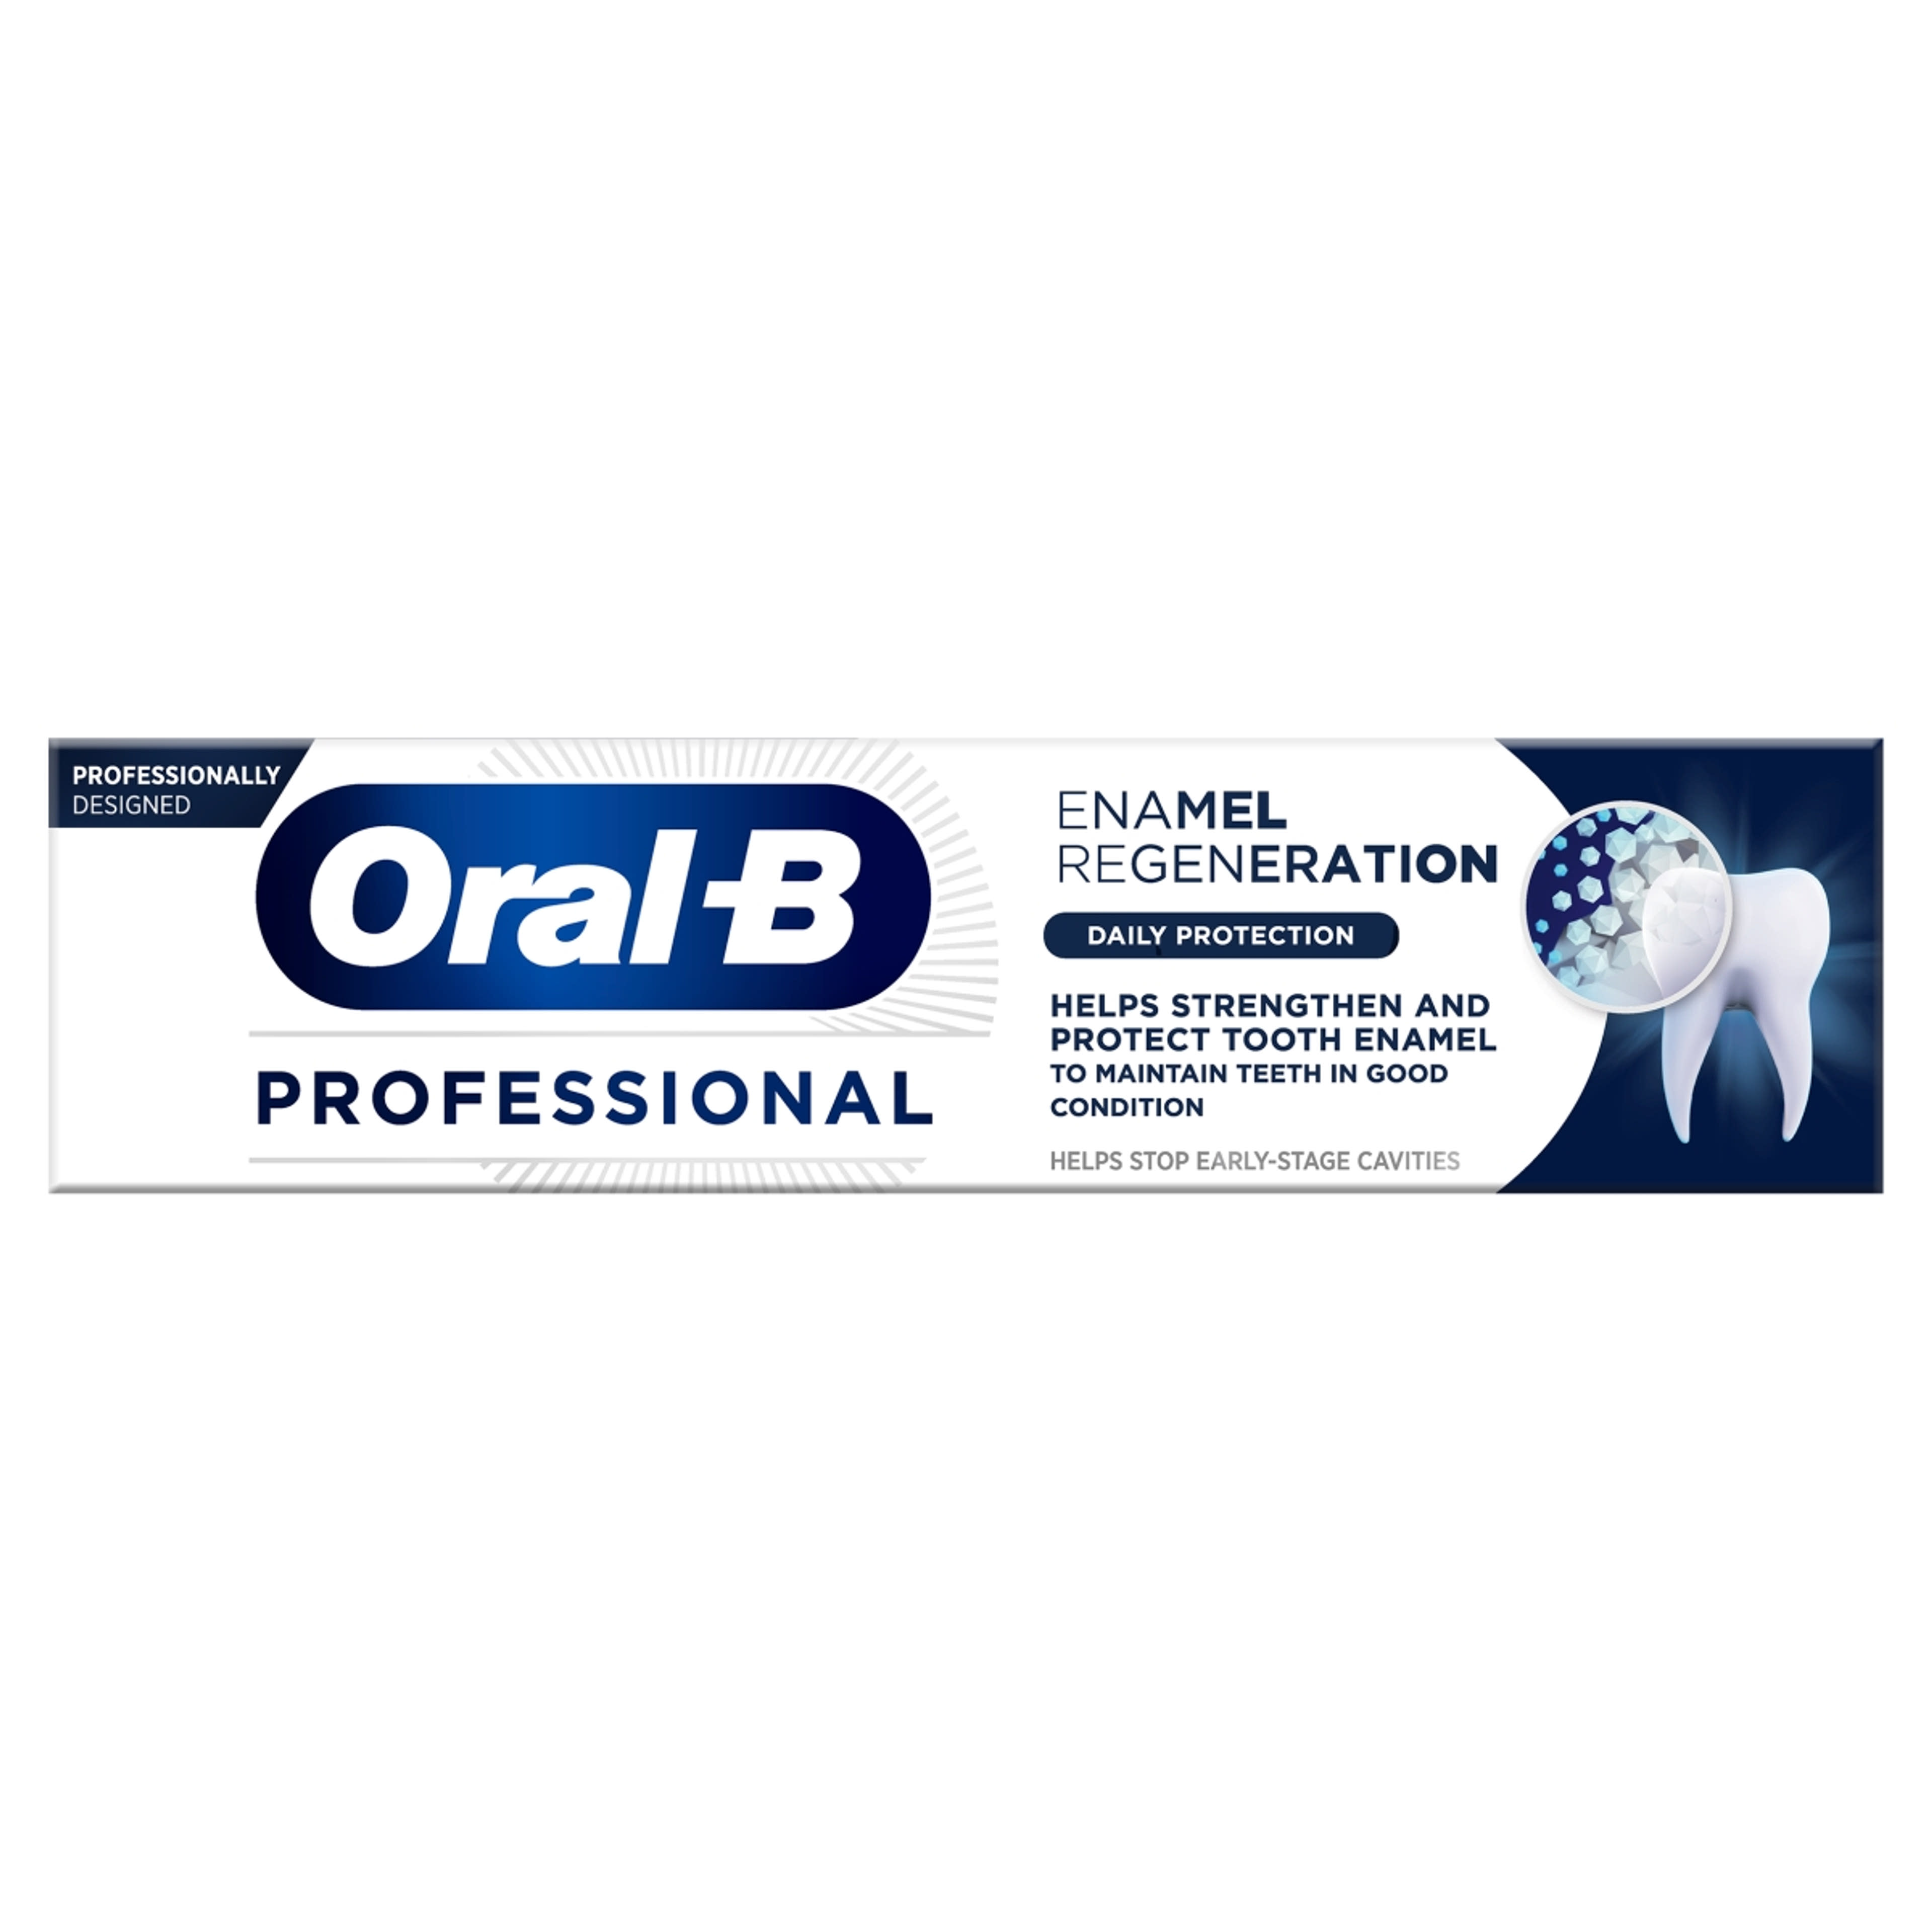 Oral-B Professional Regenerate Enamel Daily Protection fogkrém - 75 ml-1